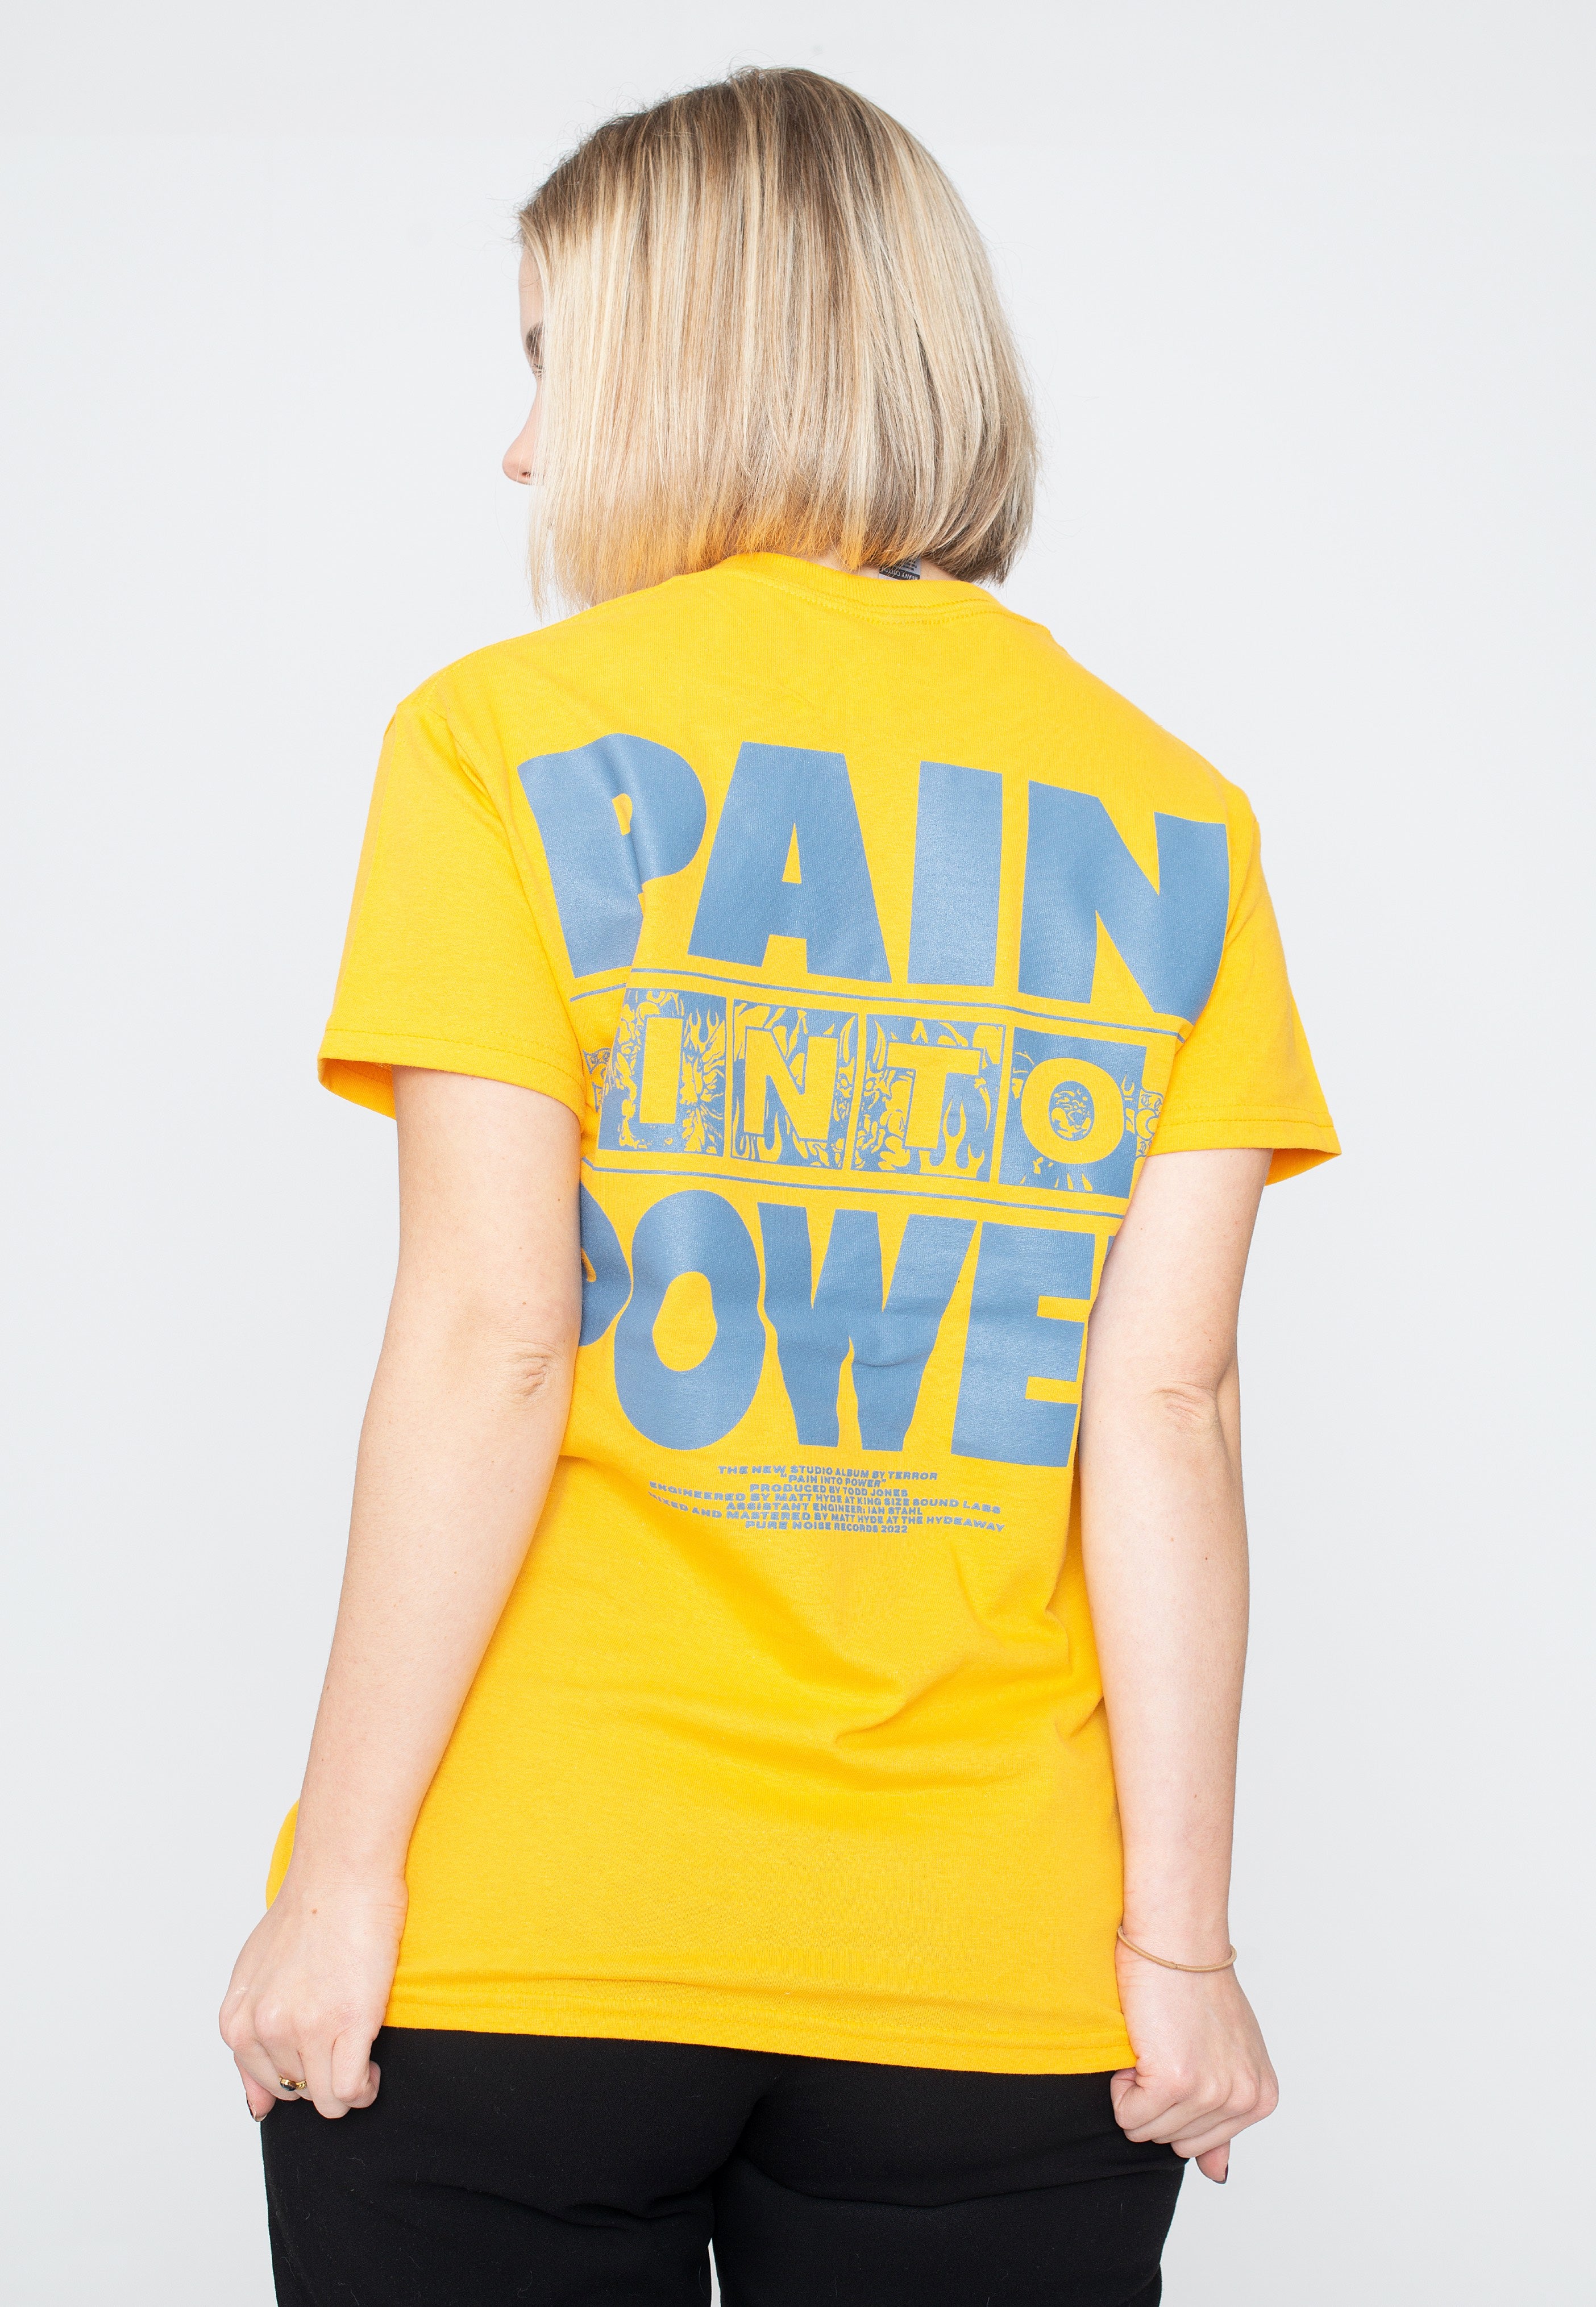 Terror - Pain Yellow - T-Shirt | Women-Image